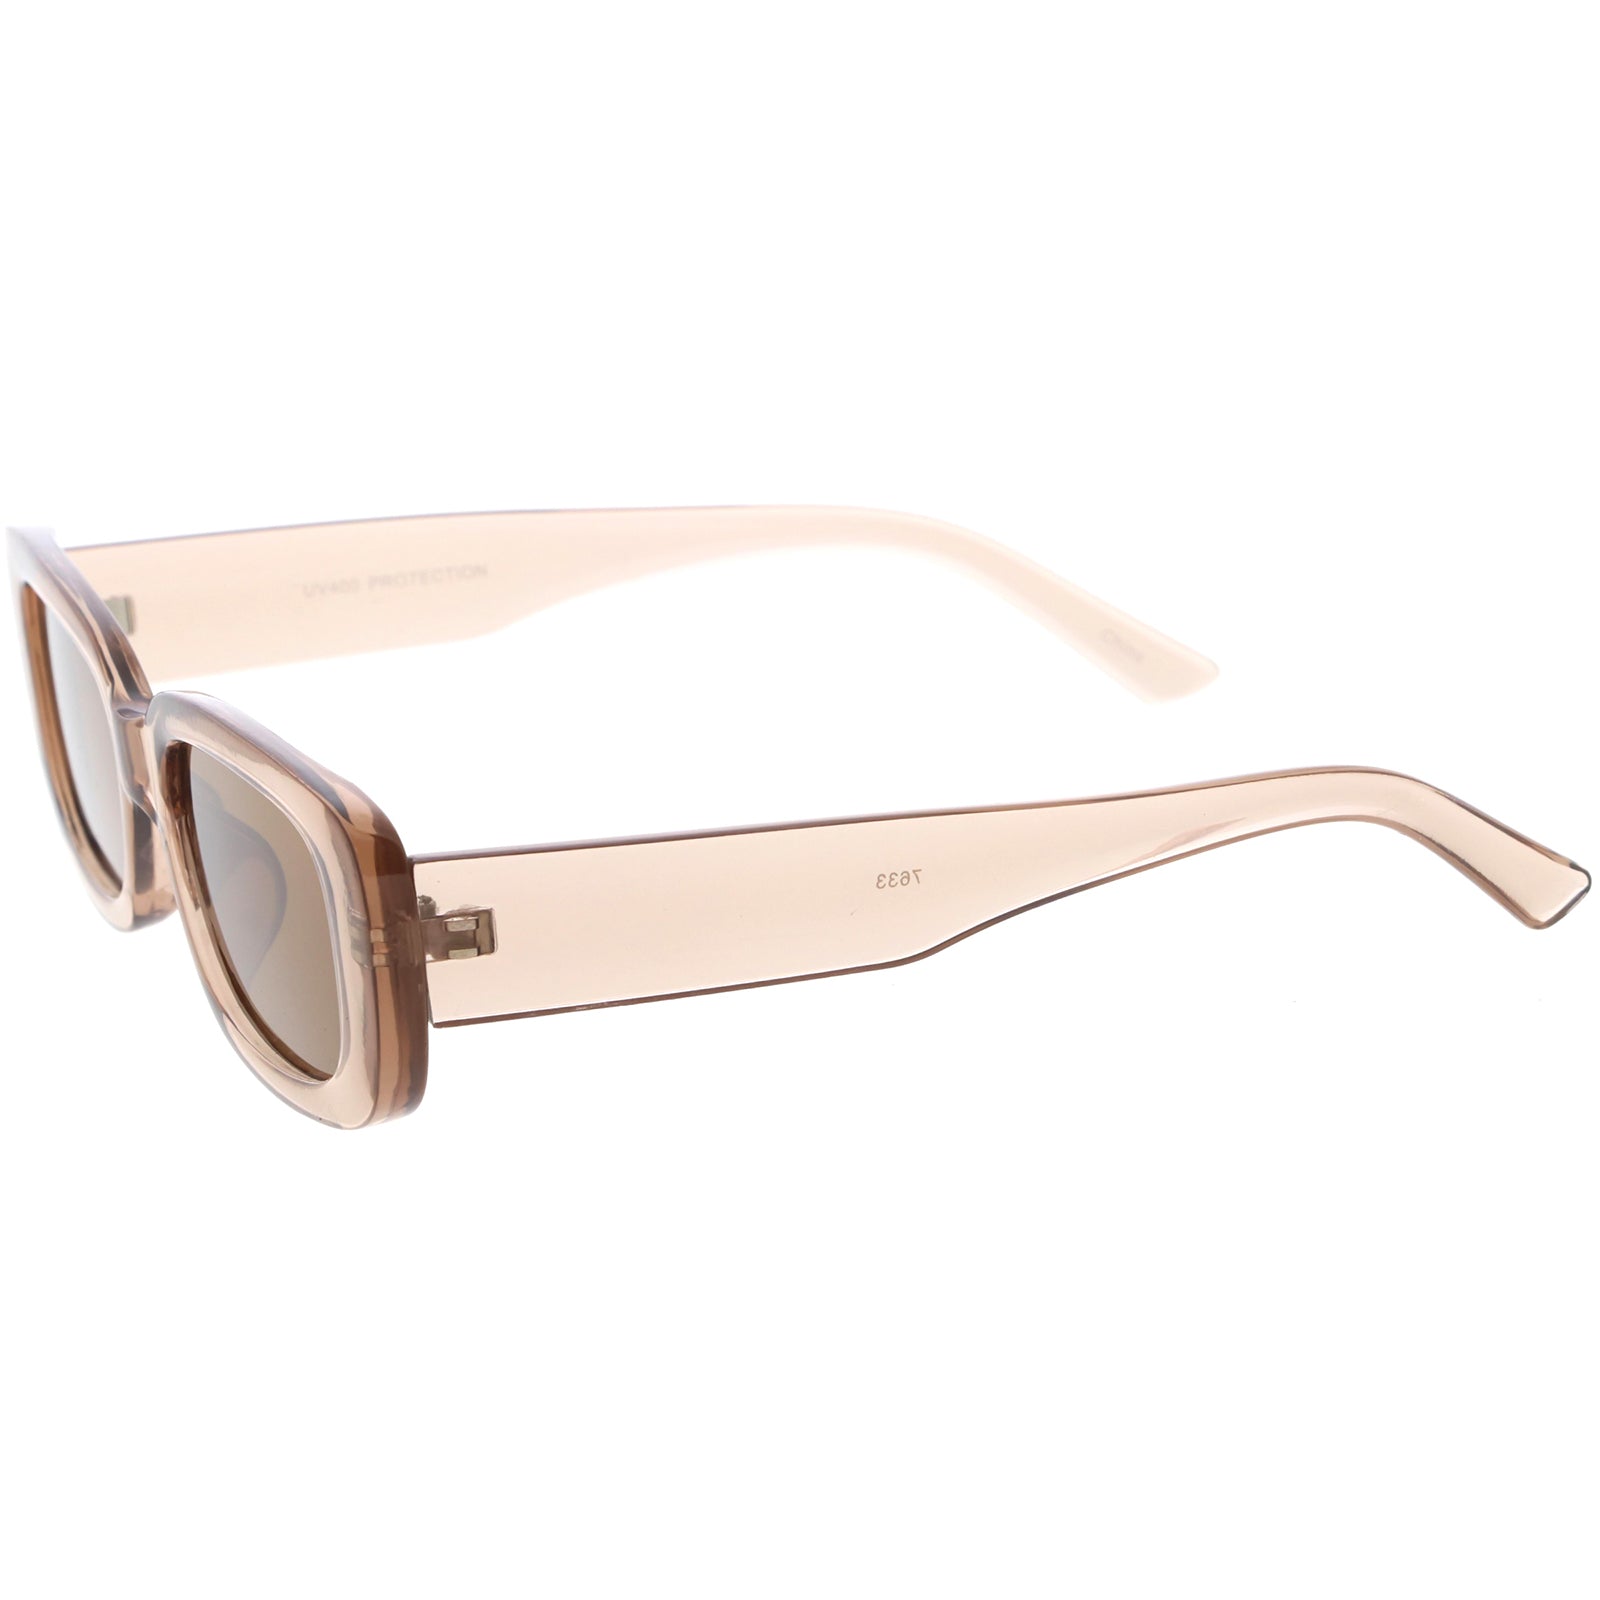 Retro Square Neutral Colored Lens Rectangle Sunglasses 50mm